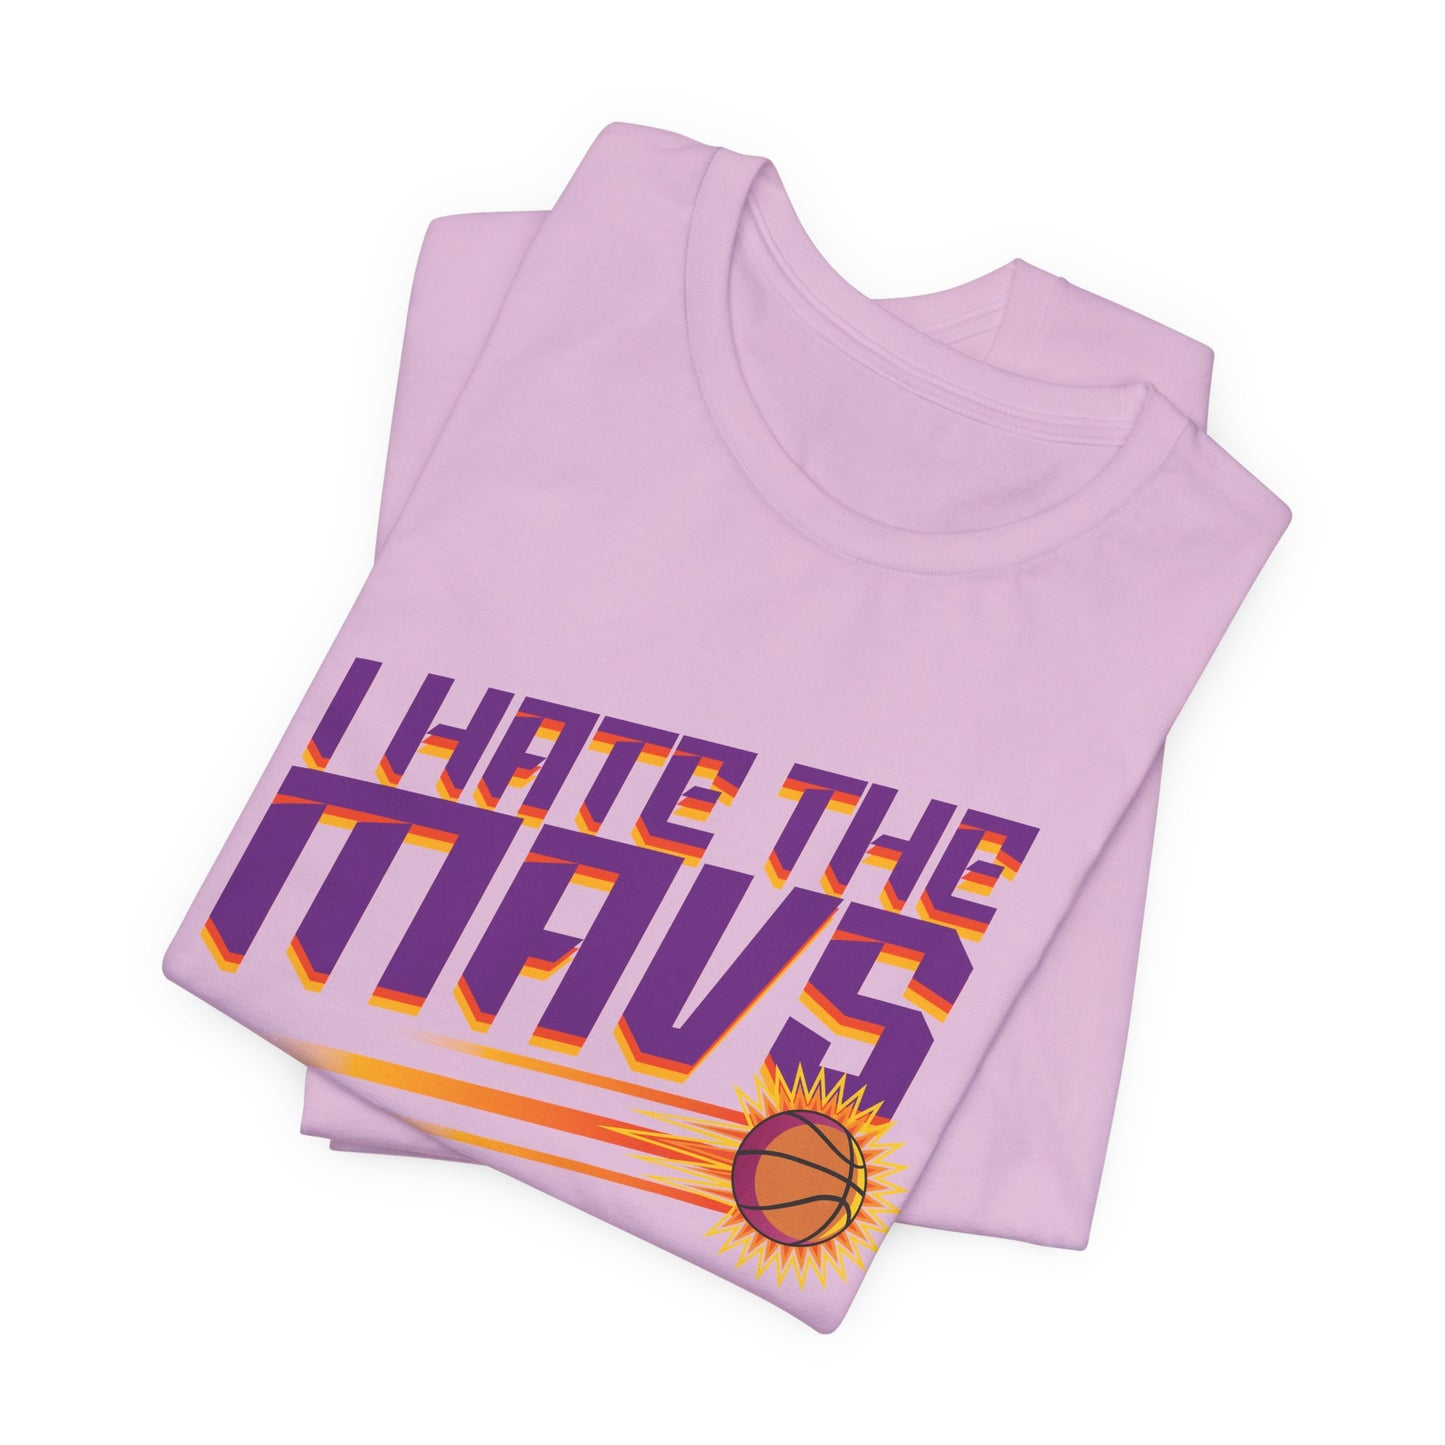 I Hate The Mavz (for Phoenix fans) - Unisex Jersey Short Sleeve Tee